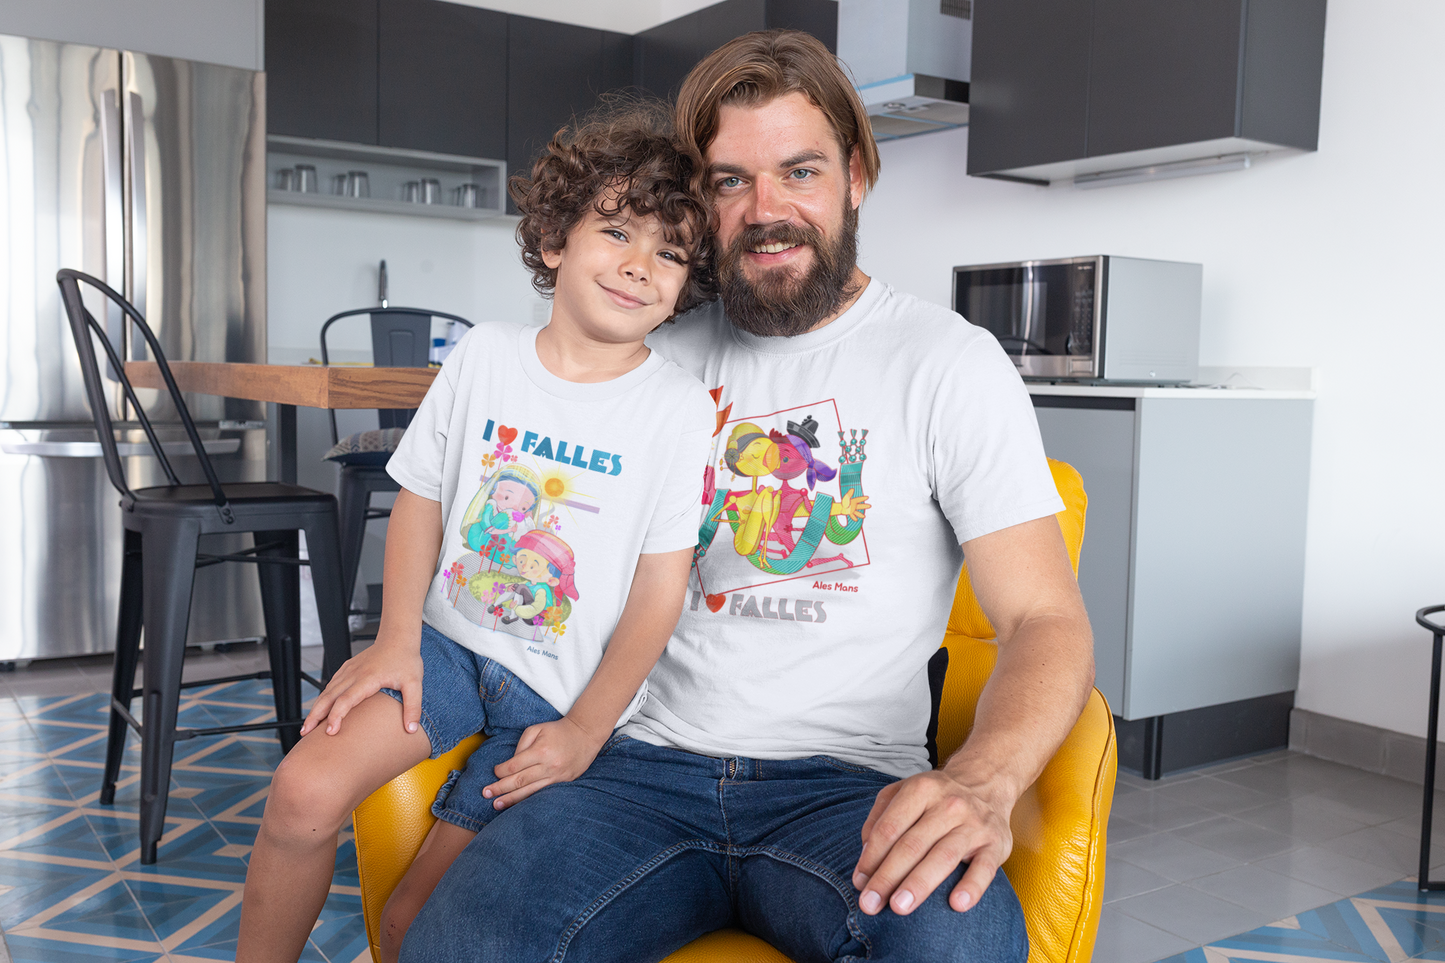 Camiseta I love Falles infantil